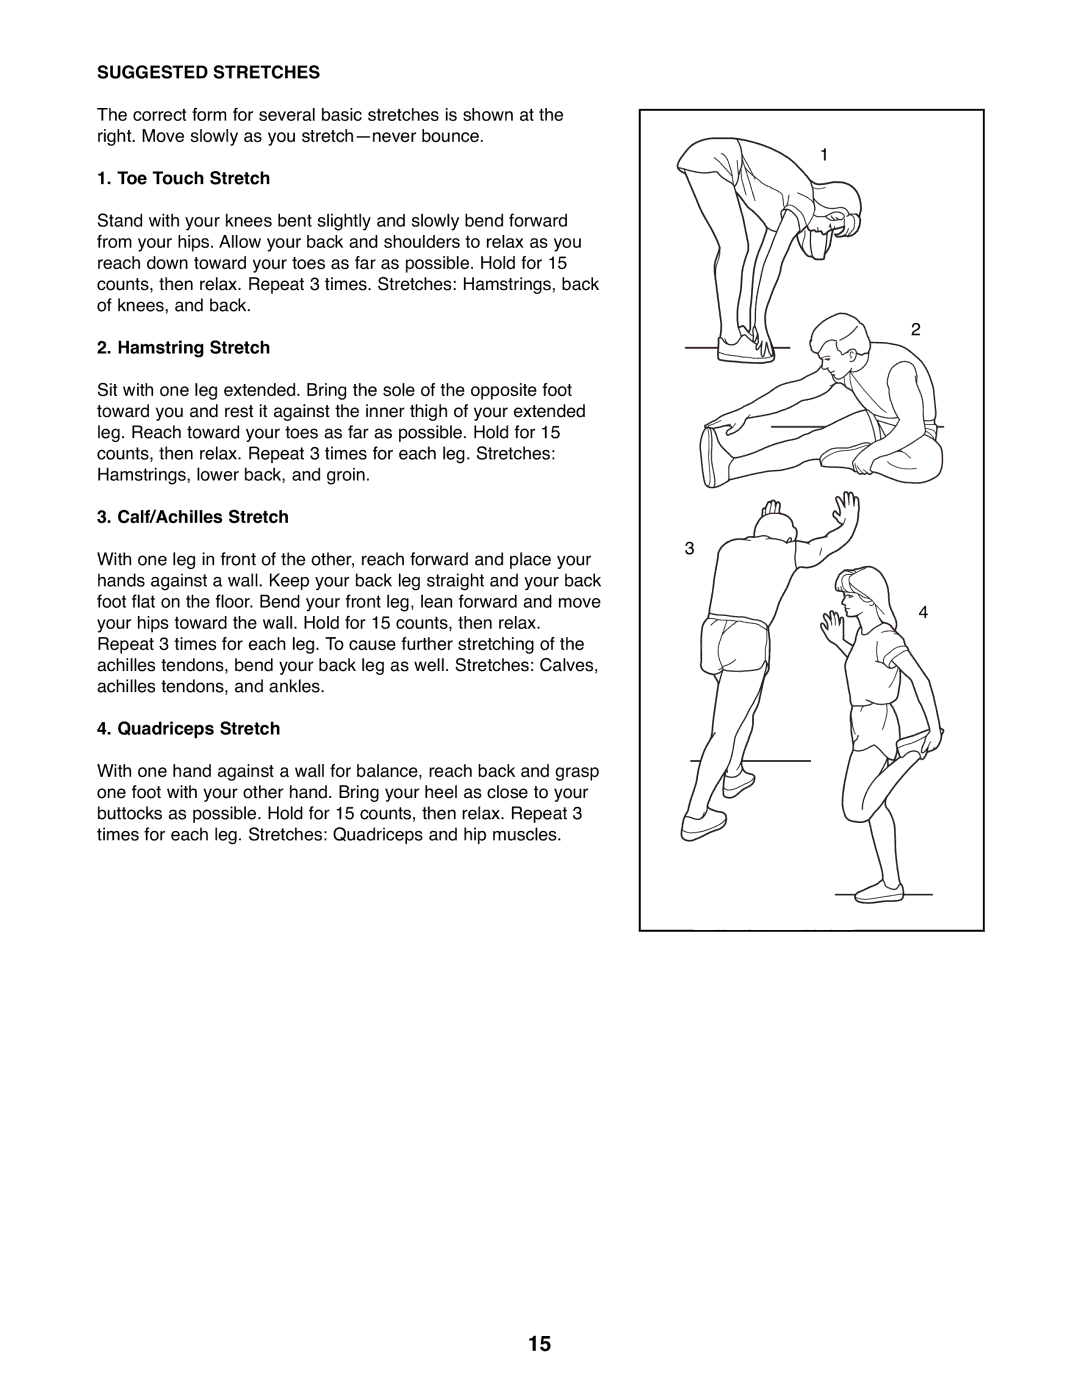 ProForm PFEVEL2486.0 Suggested Stretches, Toe Touch Stretch, Hamstring Stretch, Calf/Achilles Stretch, Quadriceps Stretch 